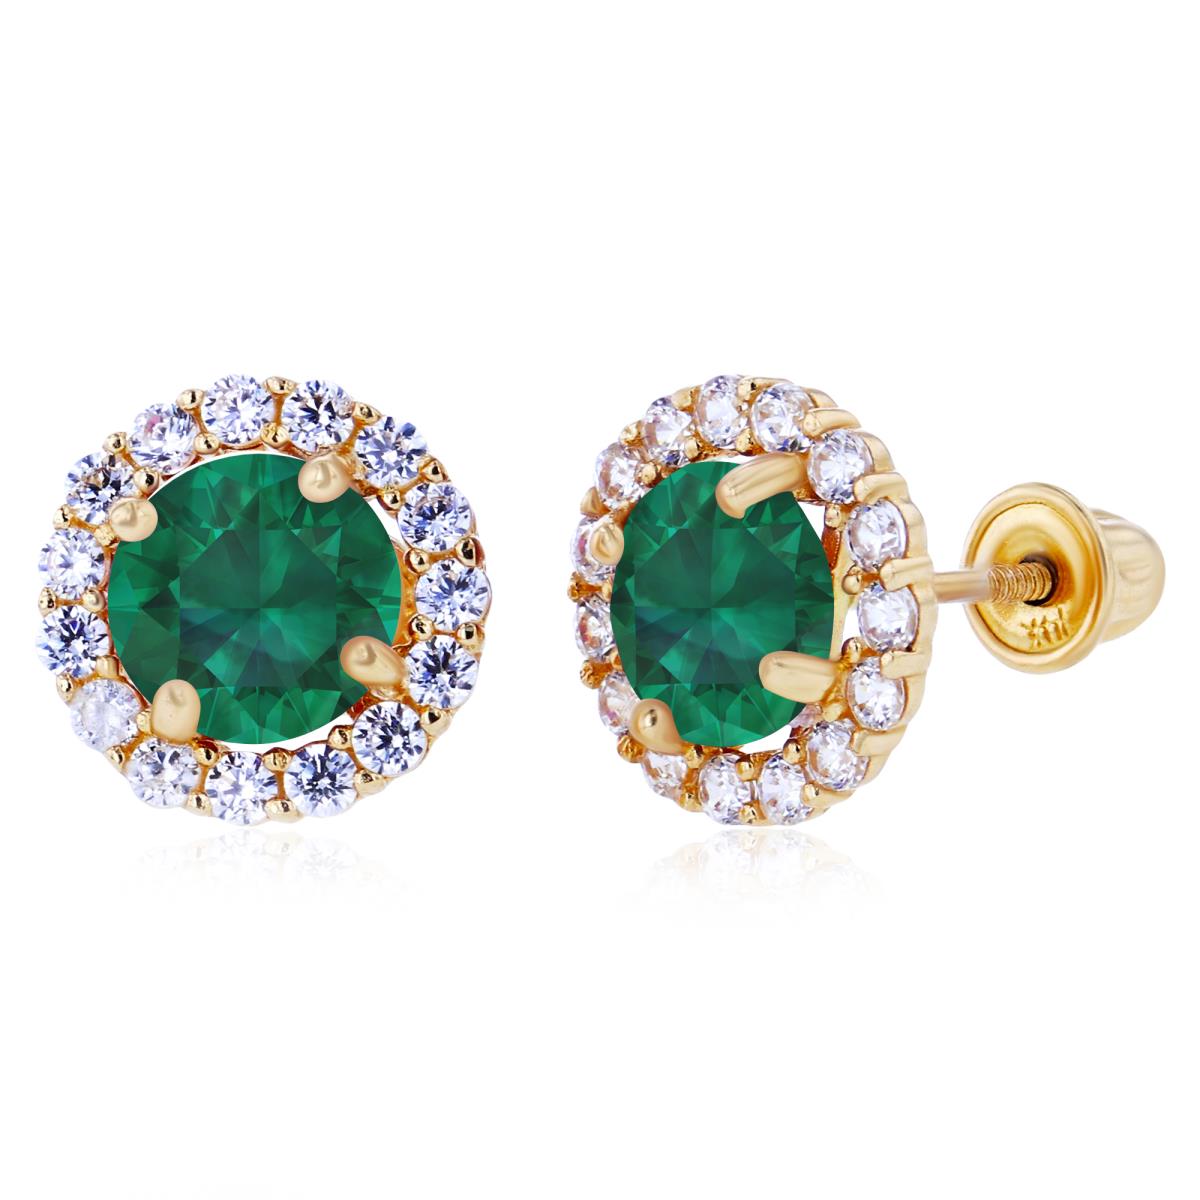 14K Yellow Gold 5mm Created Emerald & 1.25mm Created White Sapphire Halo Screwback Earrings